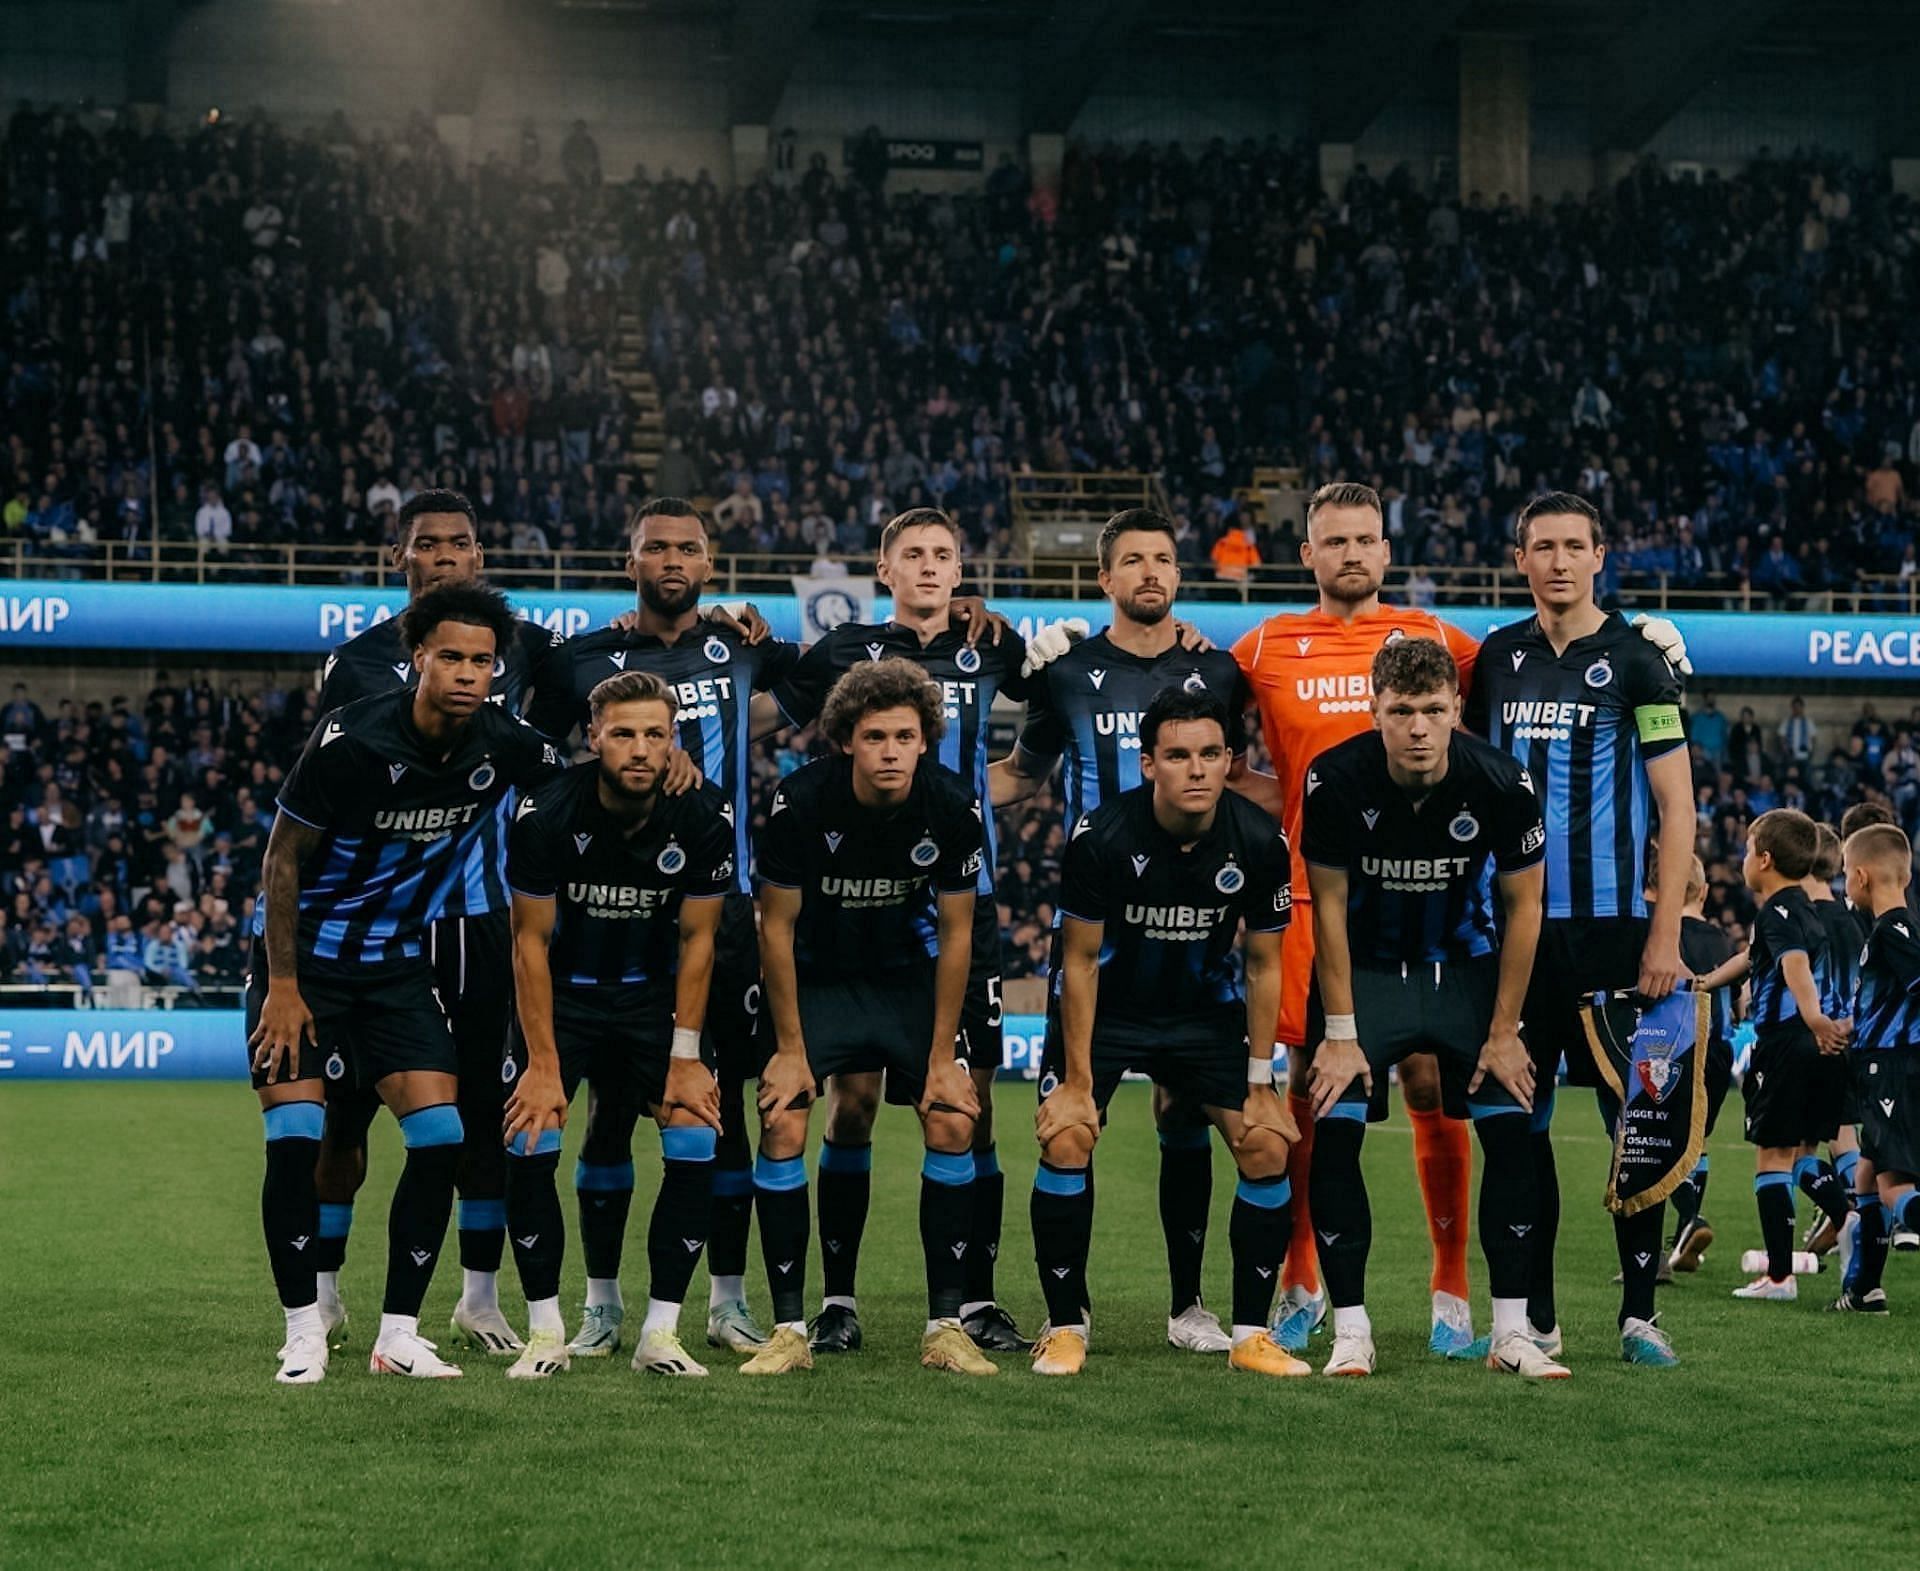 Club Brugge will face Kortrijk on Saturday